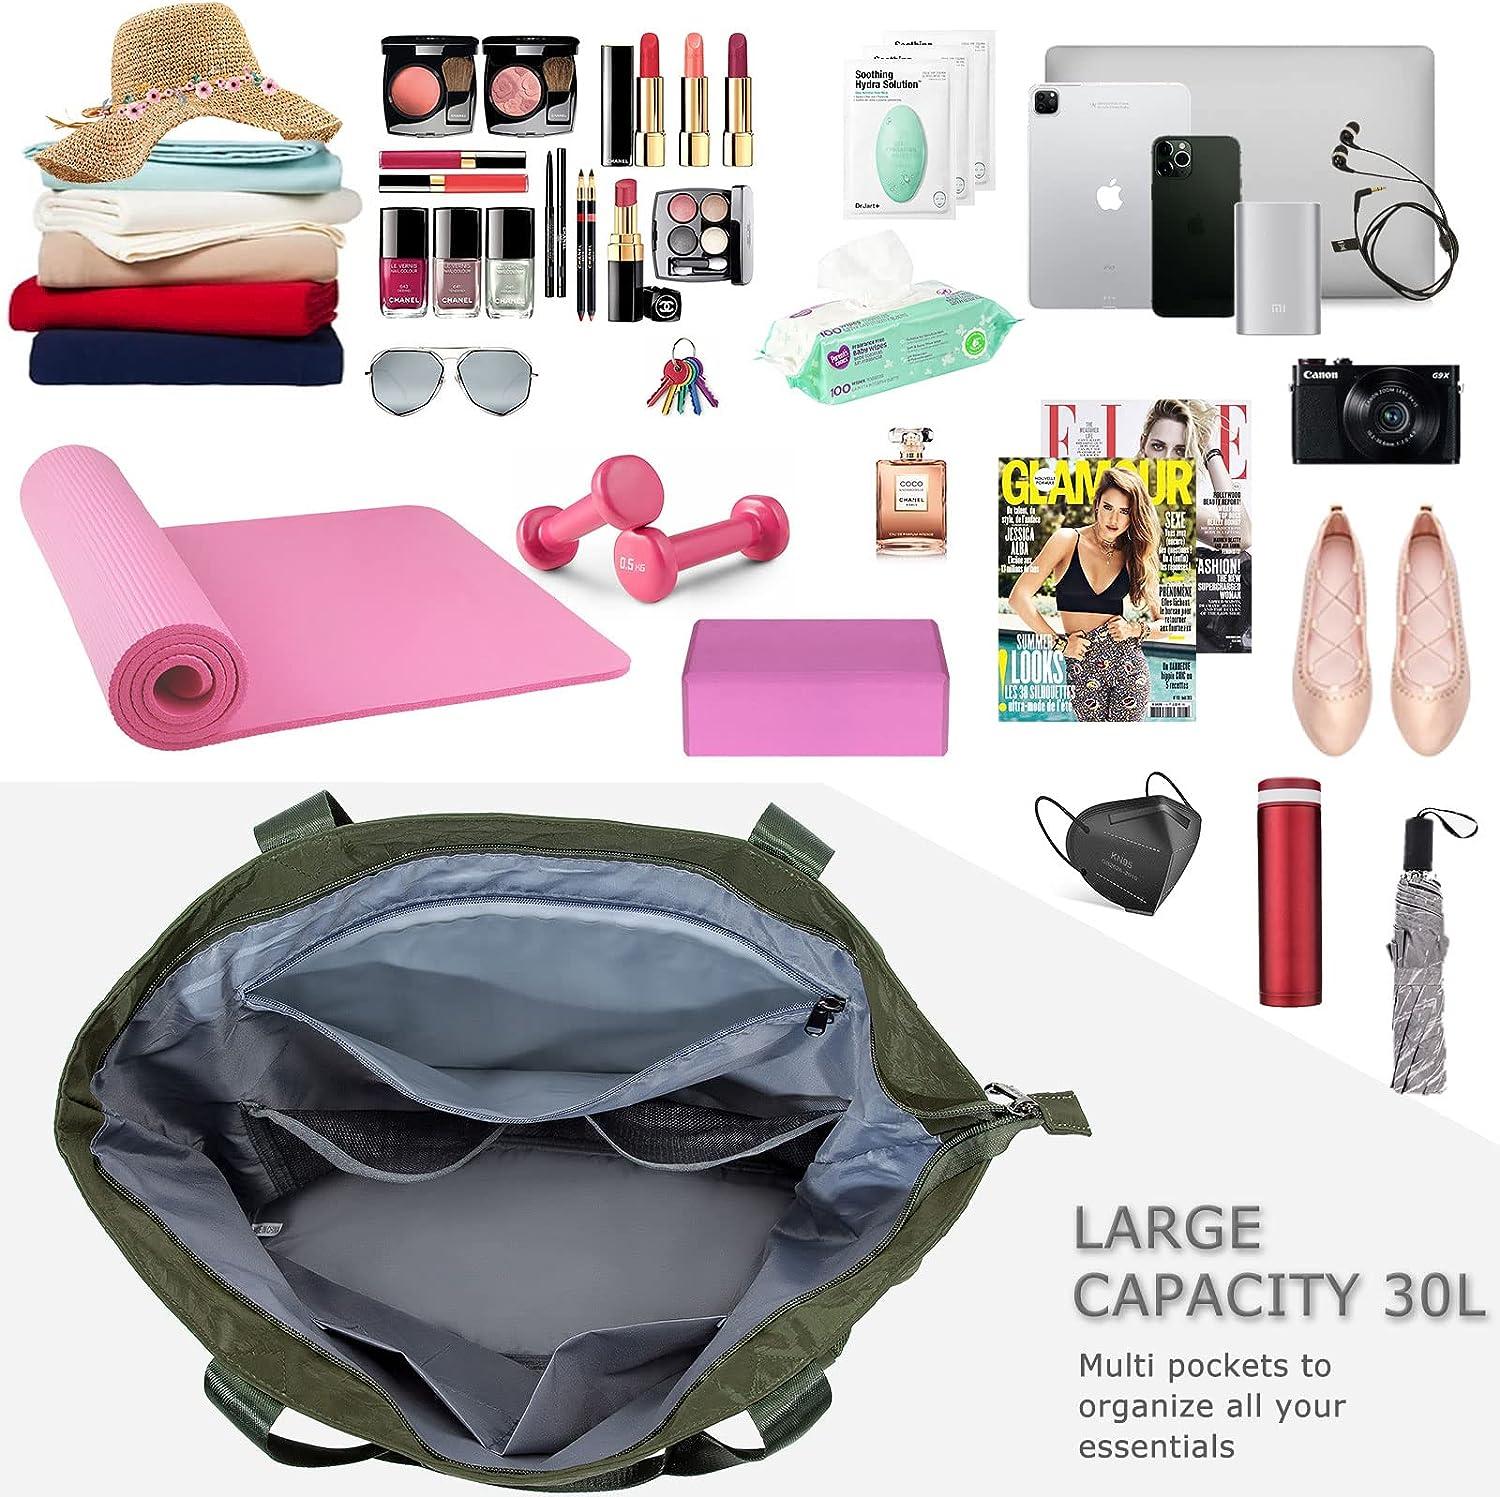  BOCMOEO Yoga Mat Bag, Yoga Tote Bags And Carriers